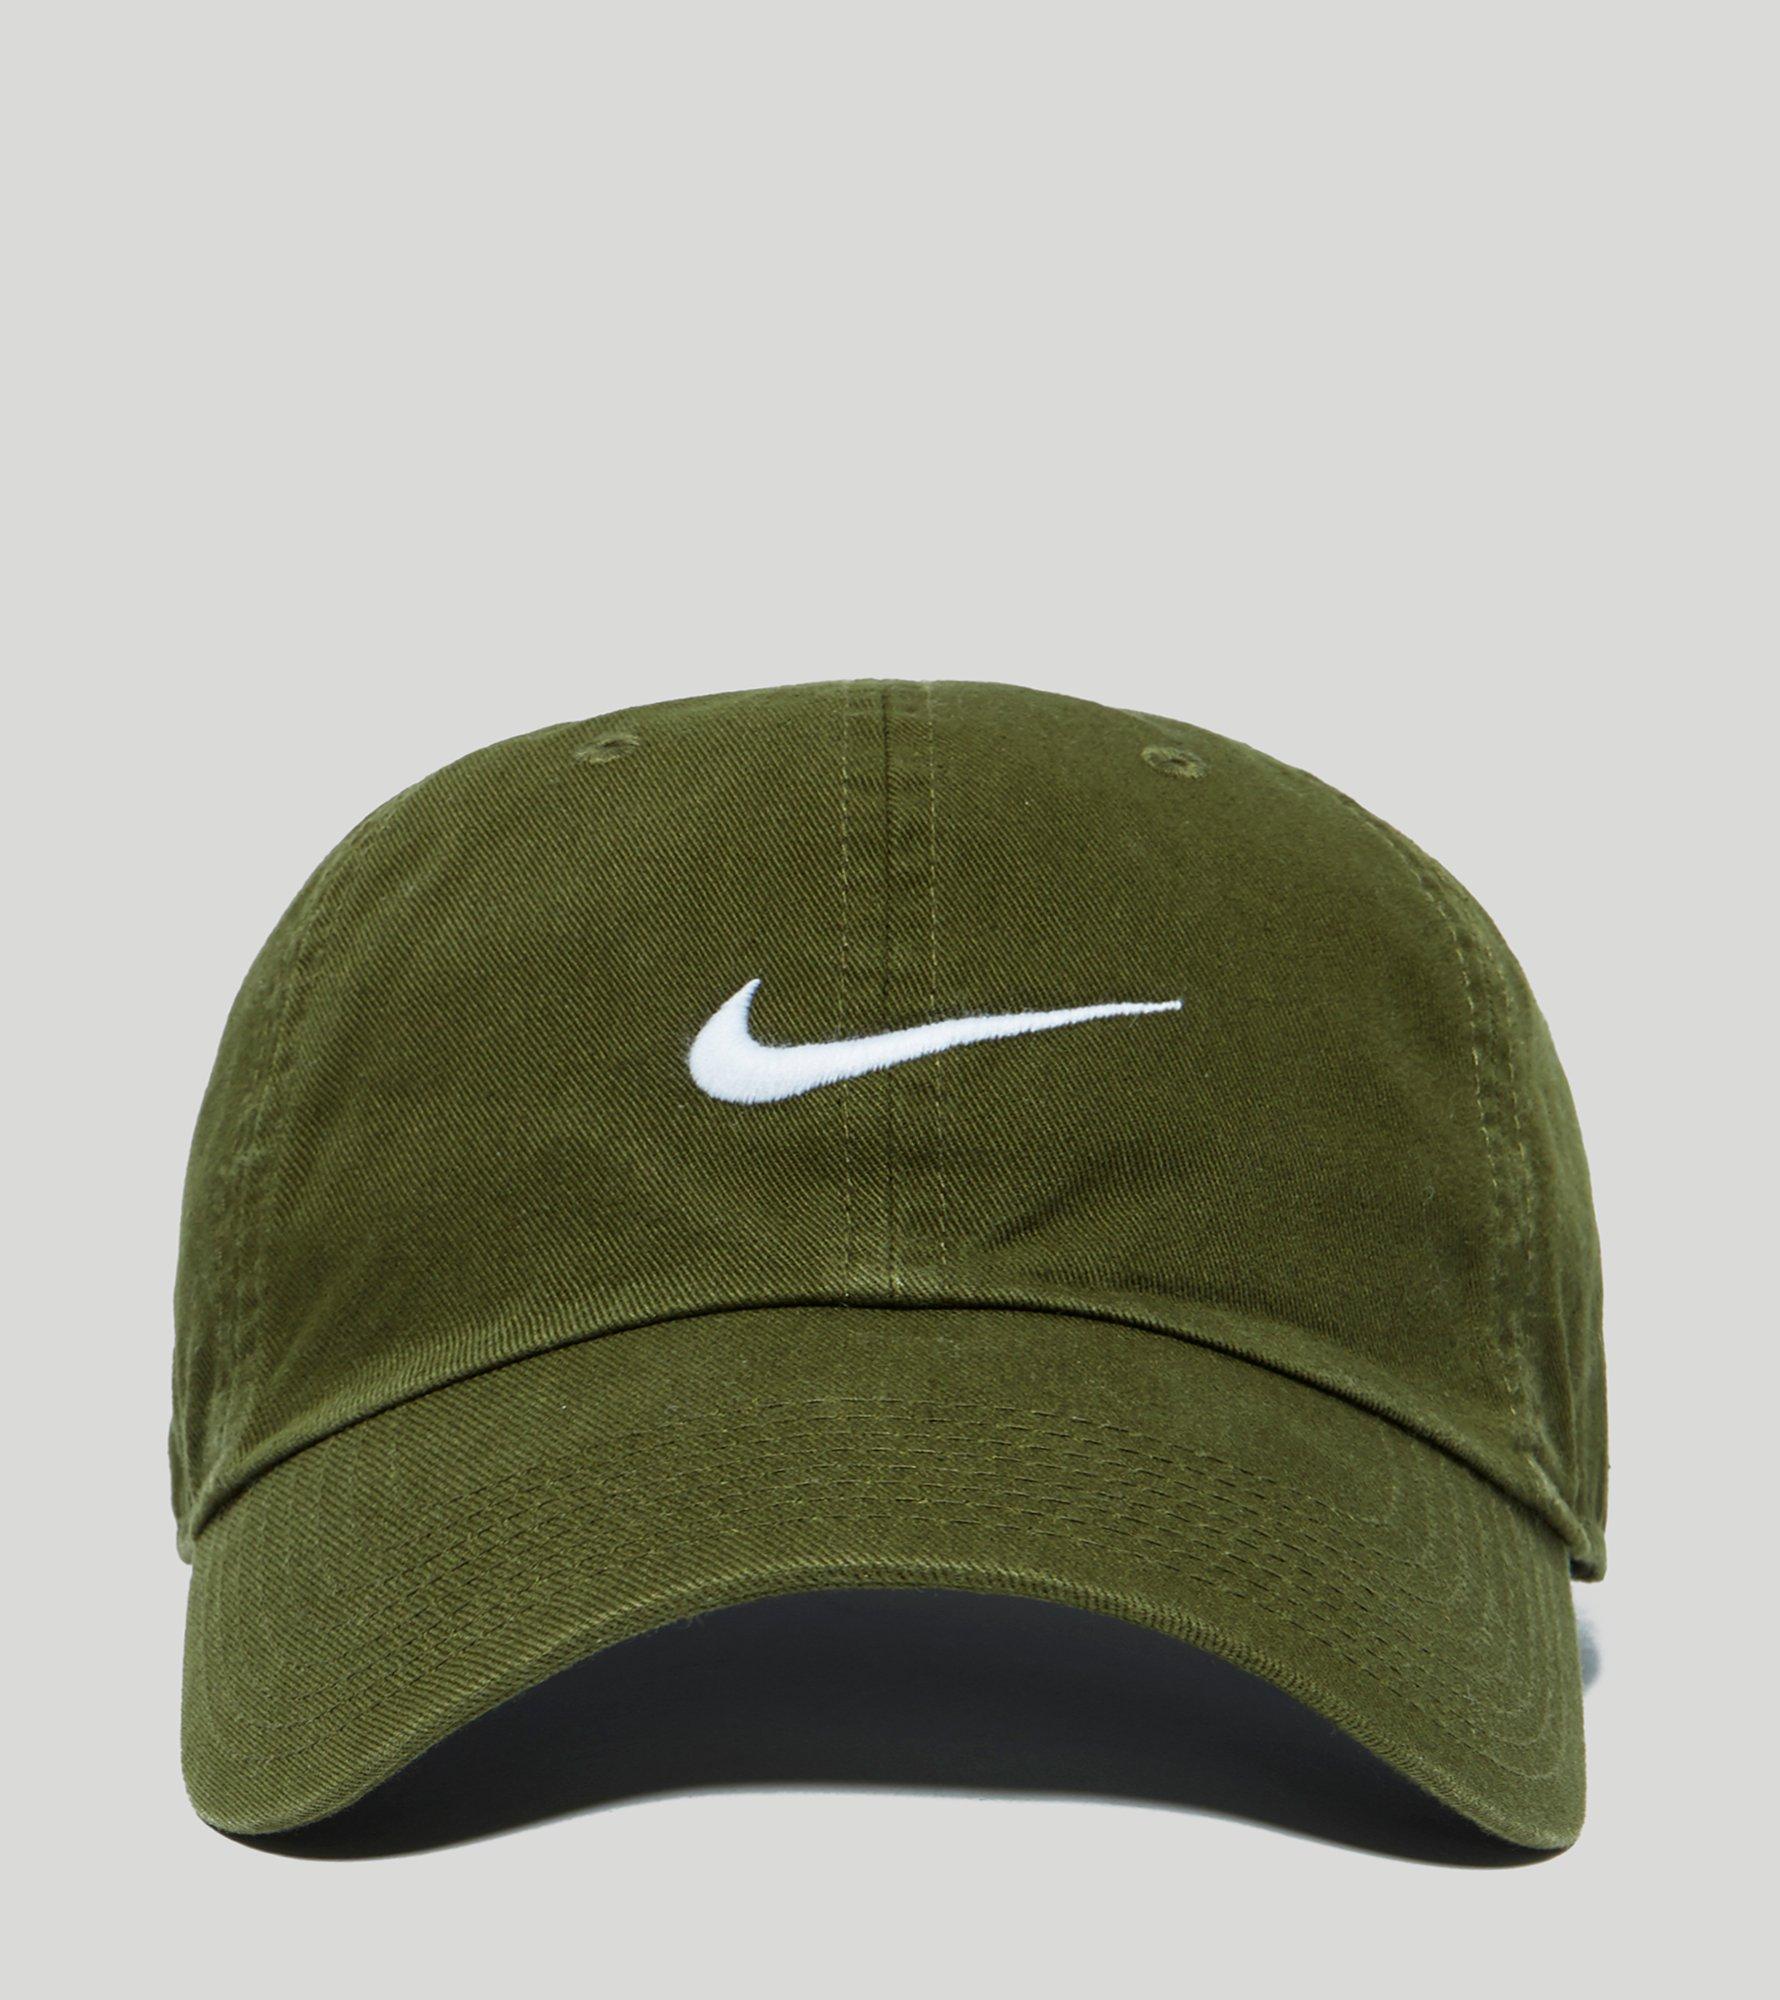 Nike Swoosh Cap In Green 546126-331 for Men - Lyst